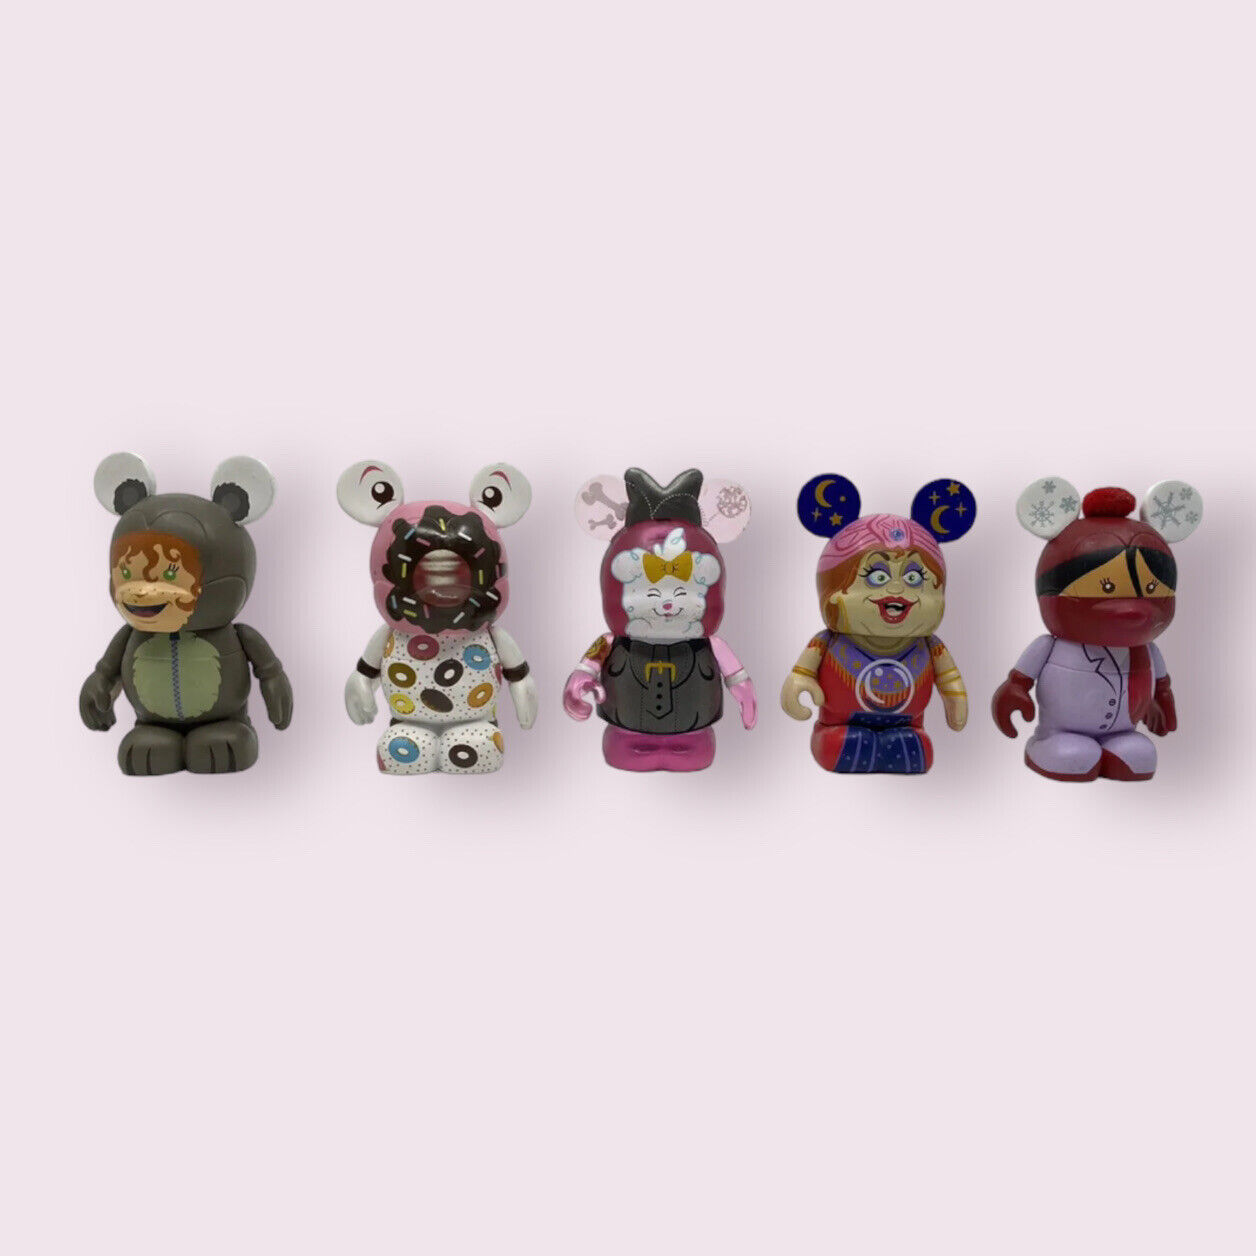 Disney Vinylmation Cutesters 5 Assorted 3” Vinyl Mickey Mouse Figurines Figures